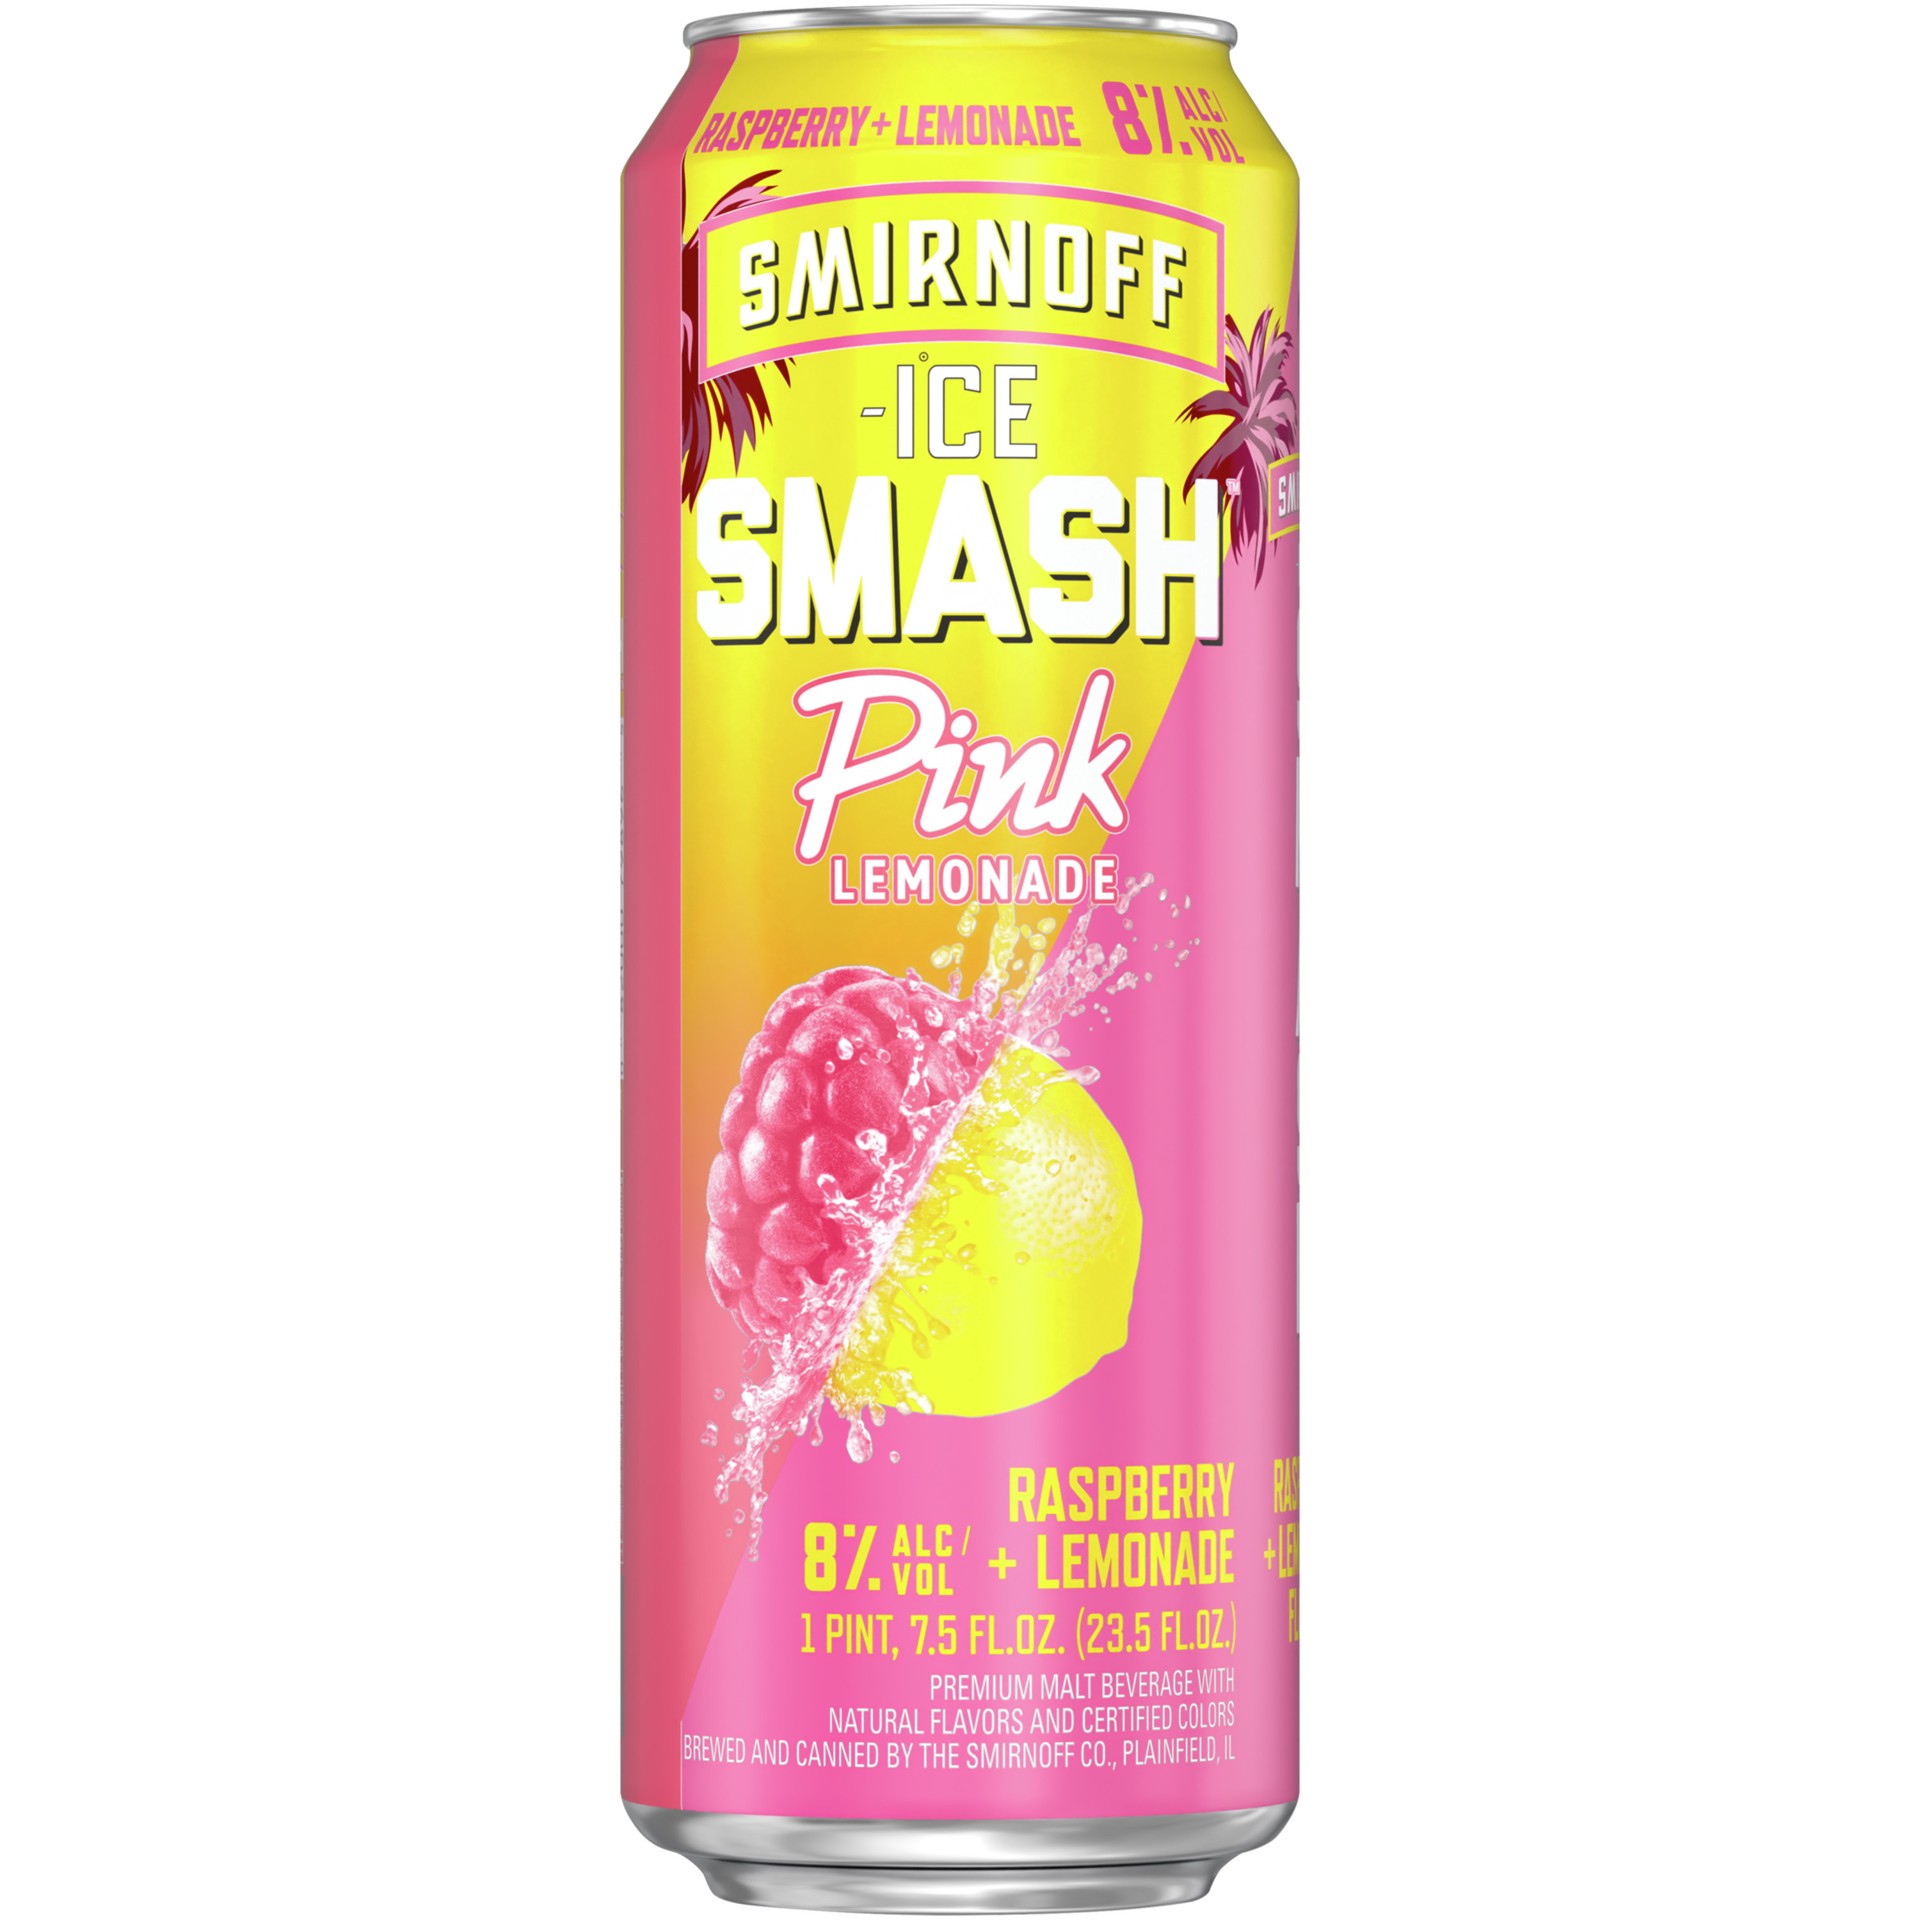 slide 1 of 13, Smirnoff Ice Smash Pink Lemonade, 23.5oz Single Can, 8% ABV, 23.50 fl oz